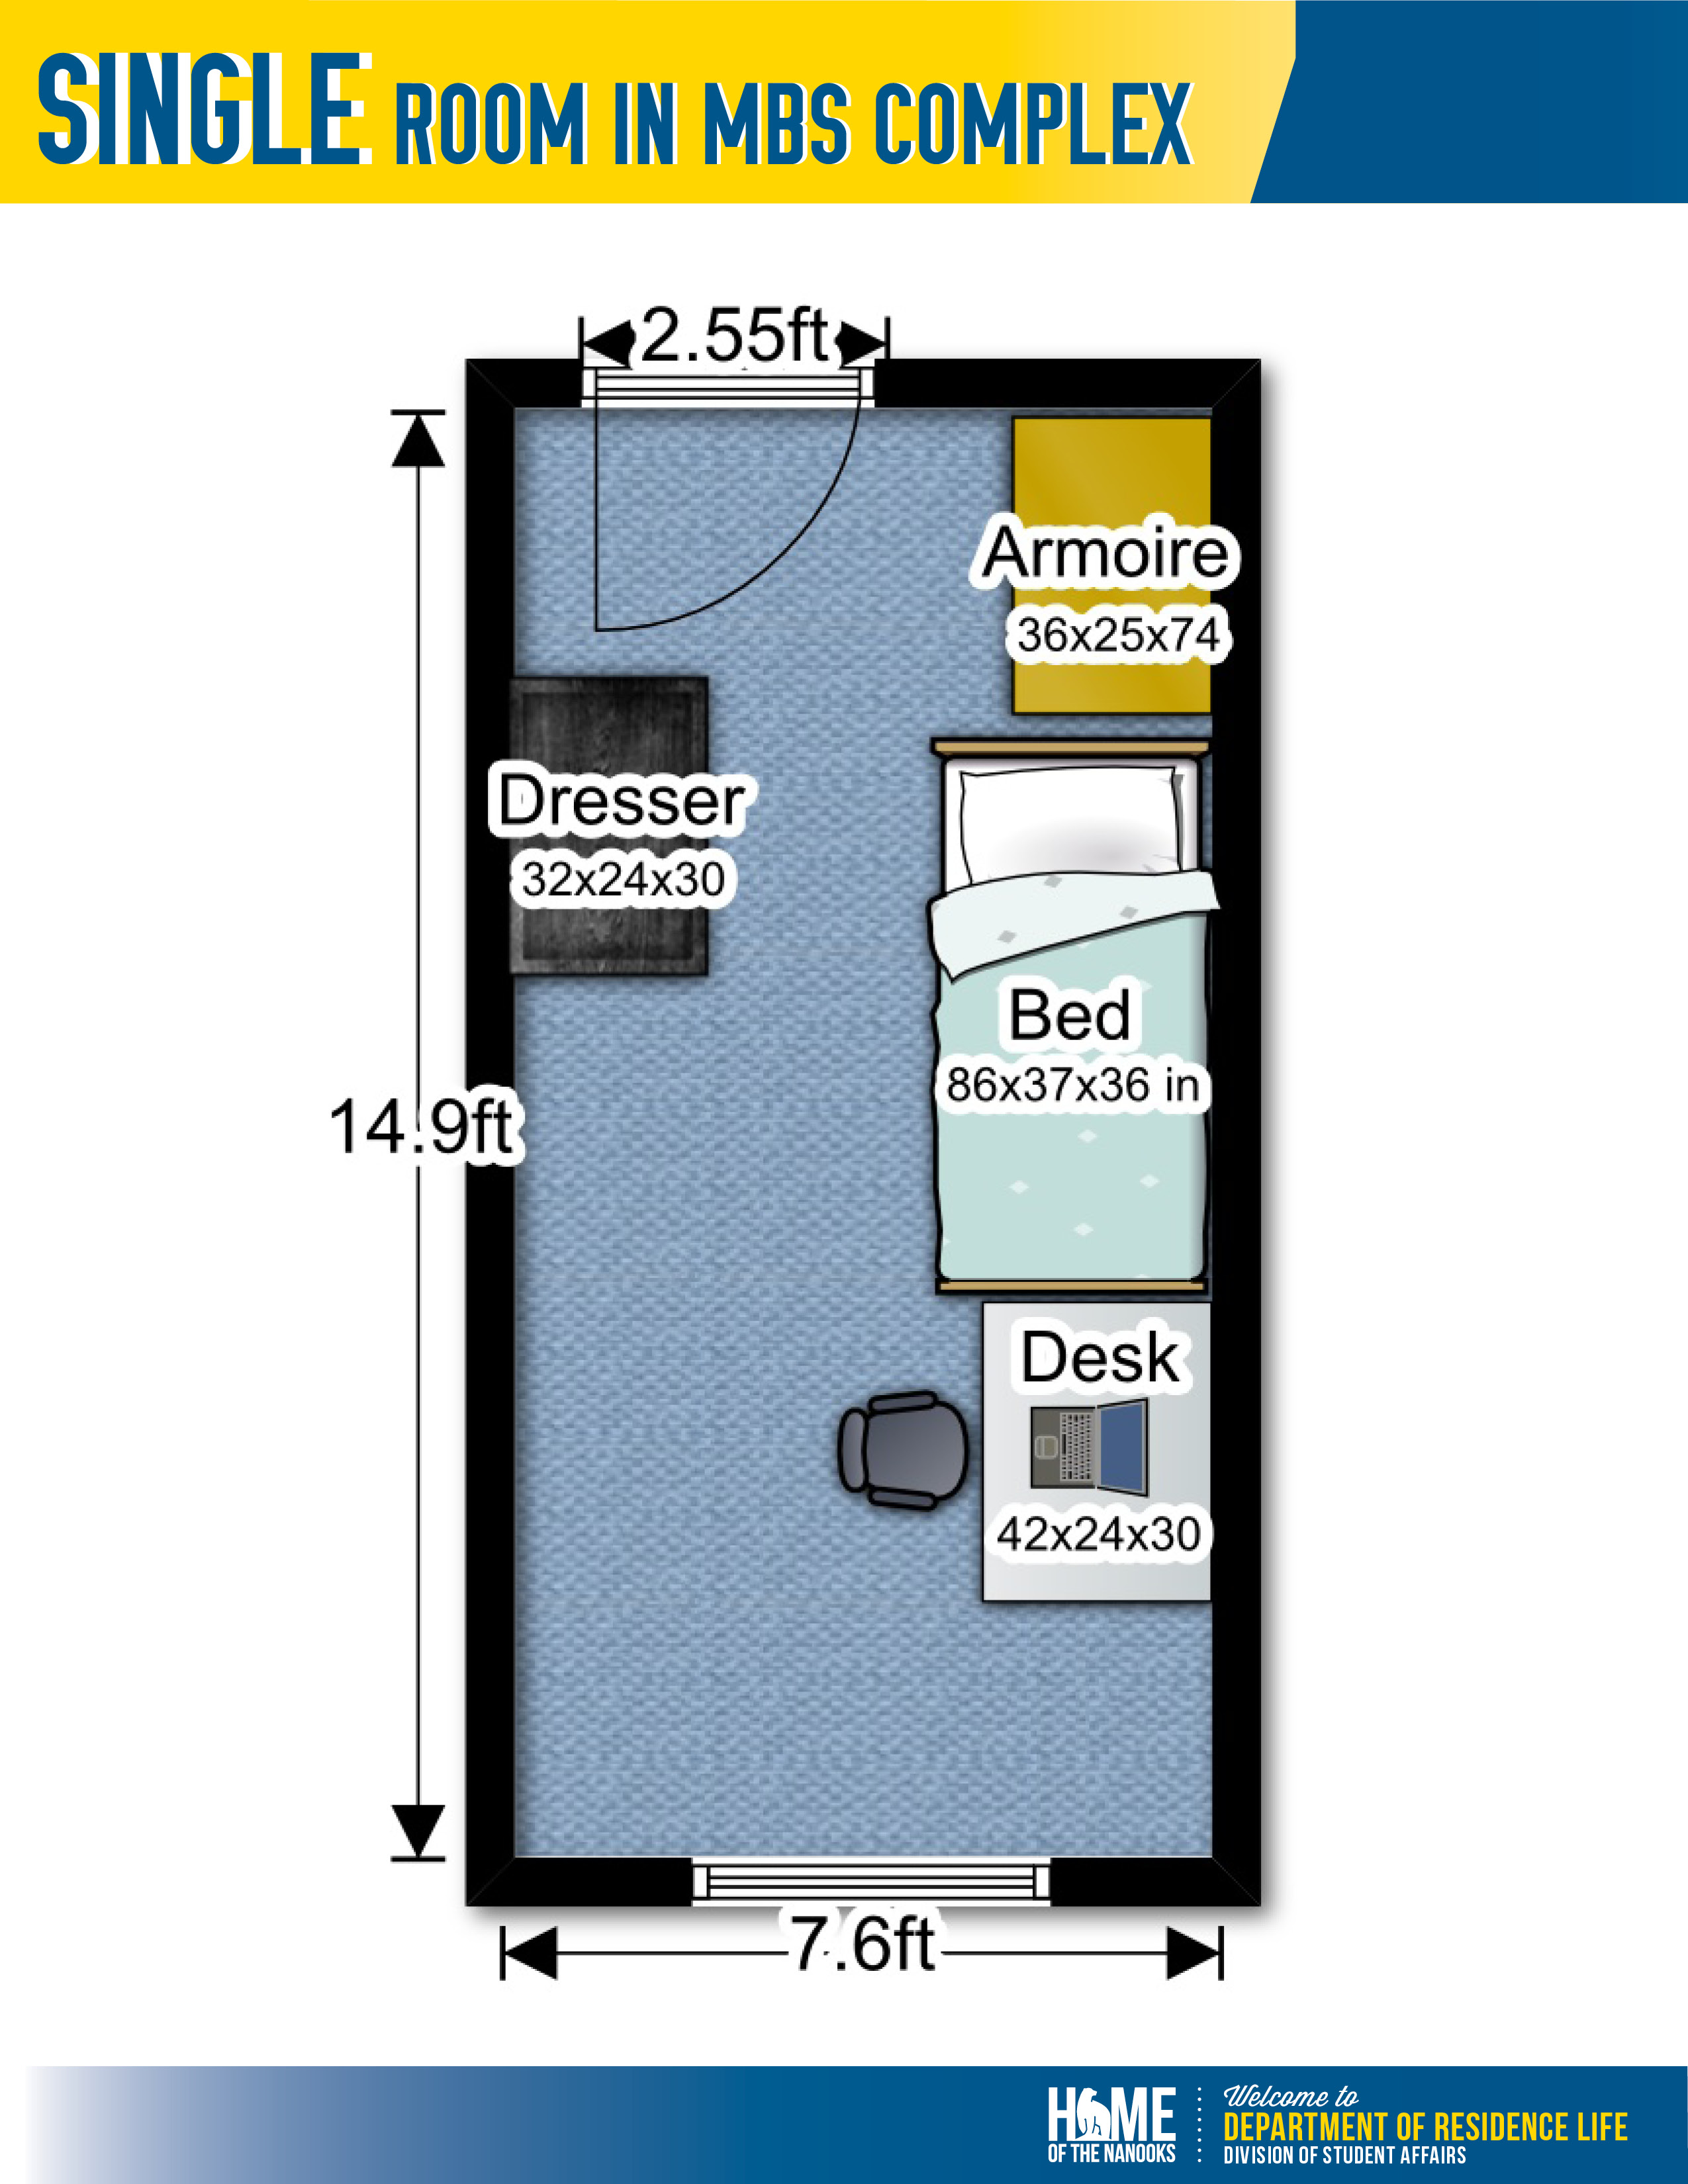 Single room layout